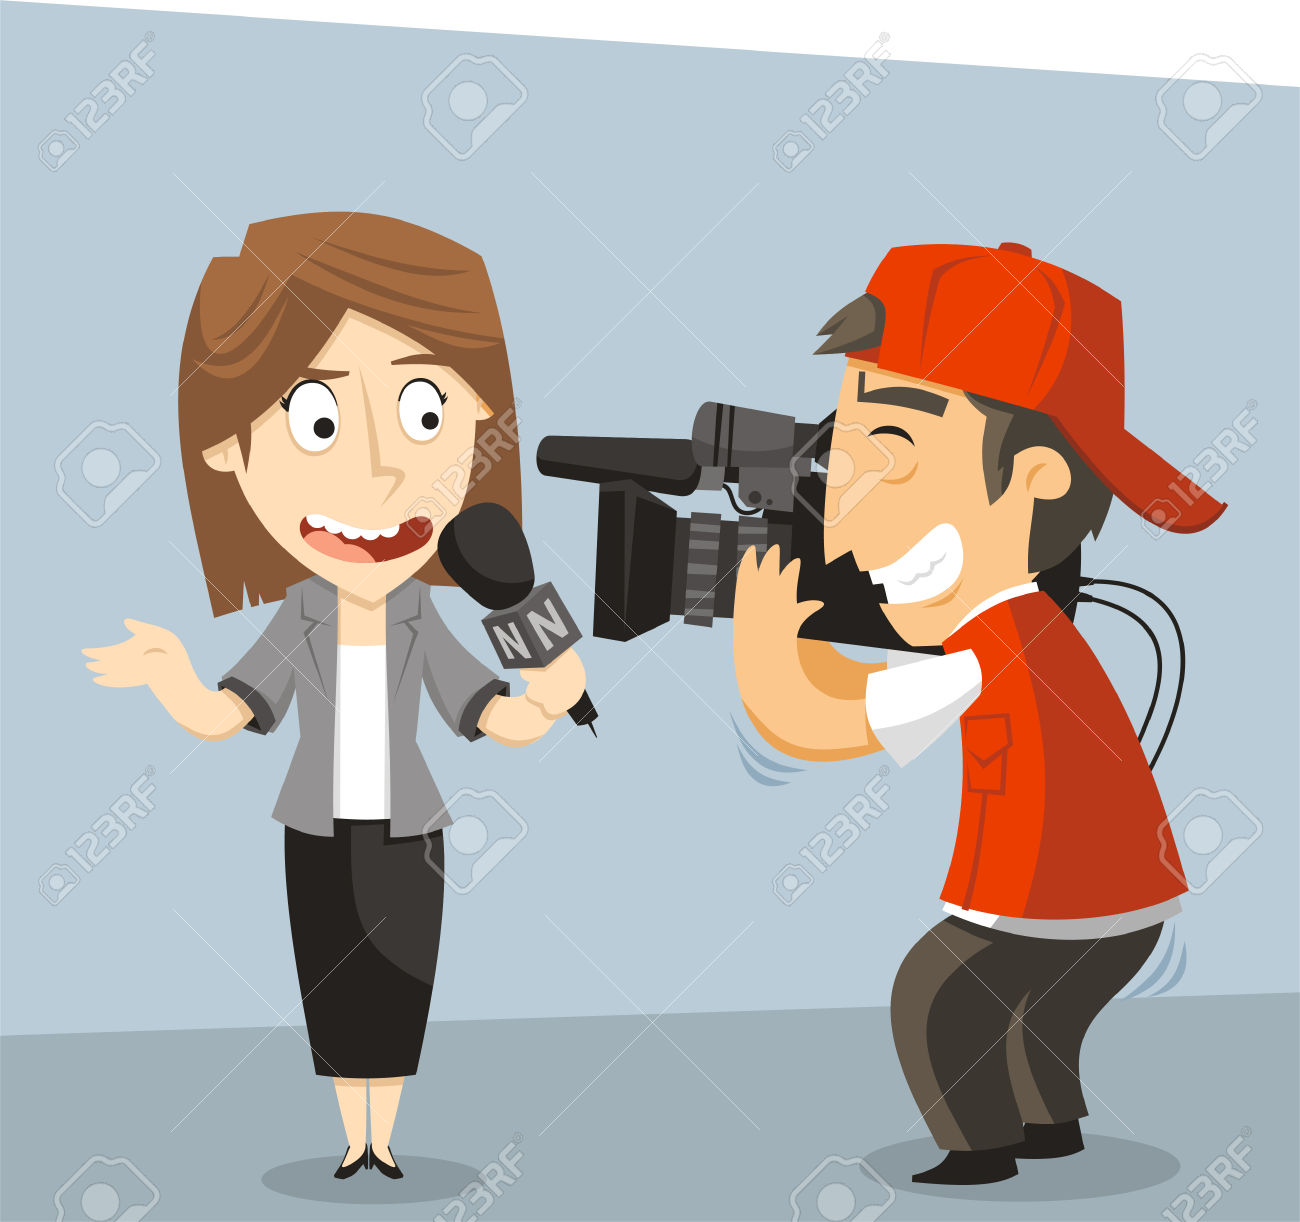 journalist: Journalist News Reporter Interview, with journalist and  interviewee. Vector illustration cartoon.